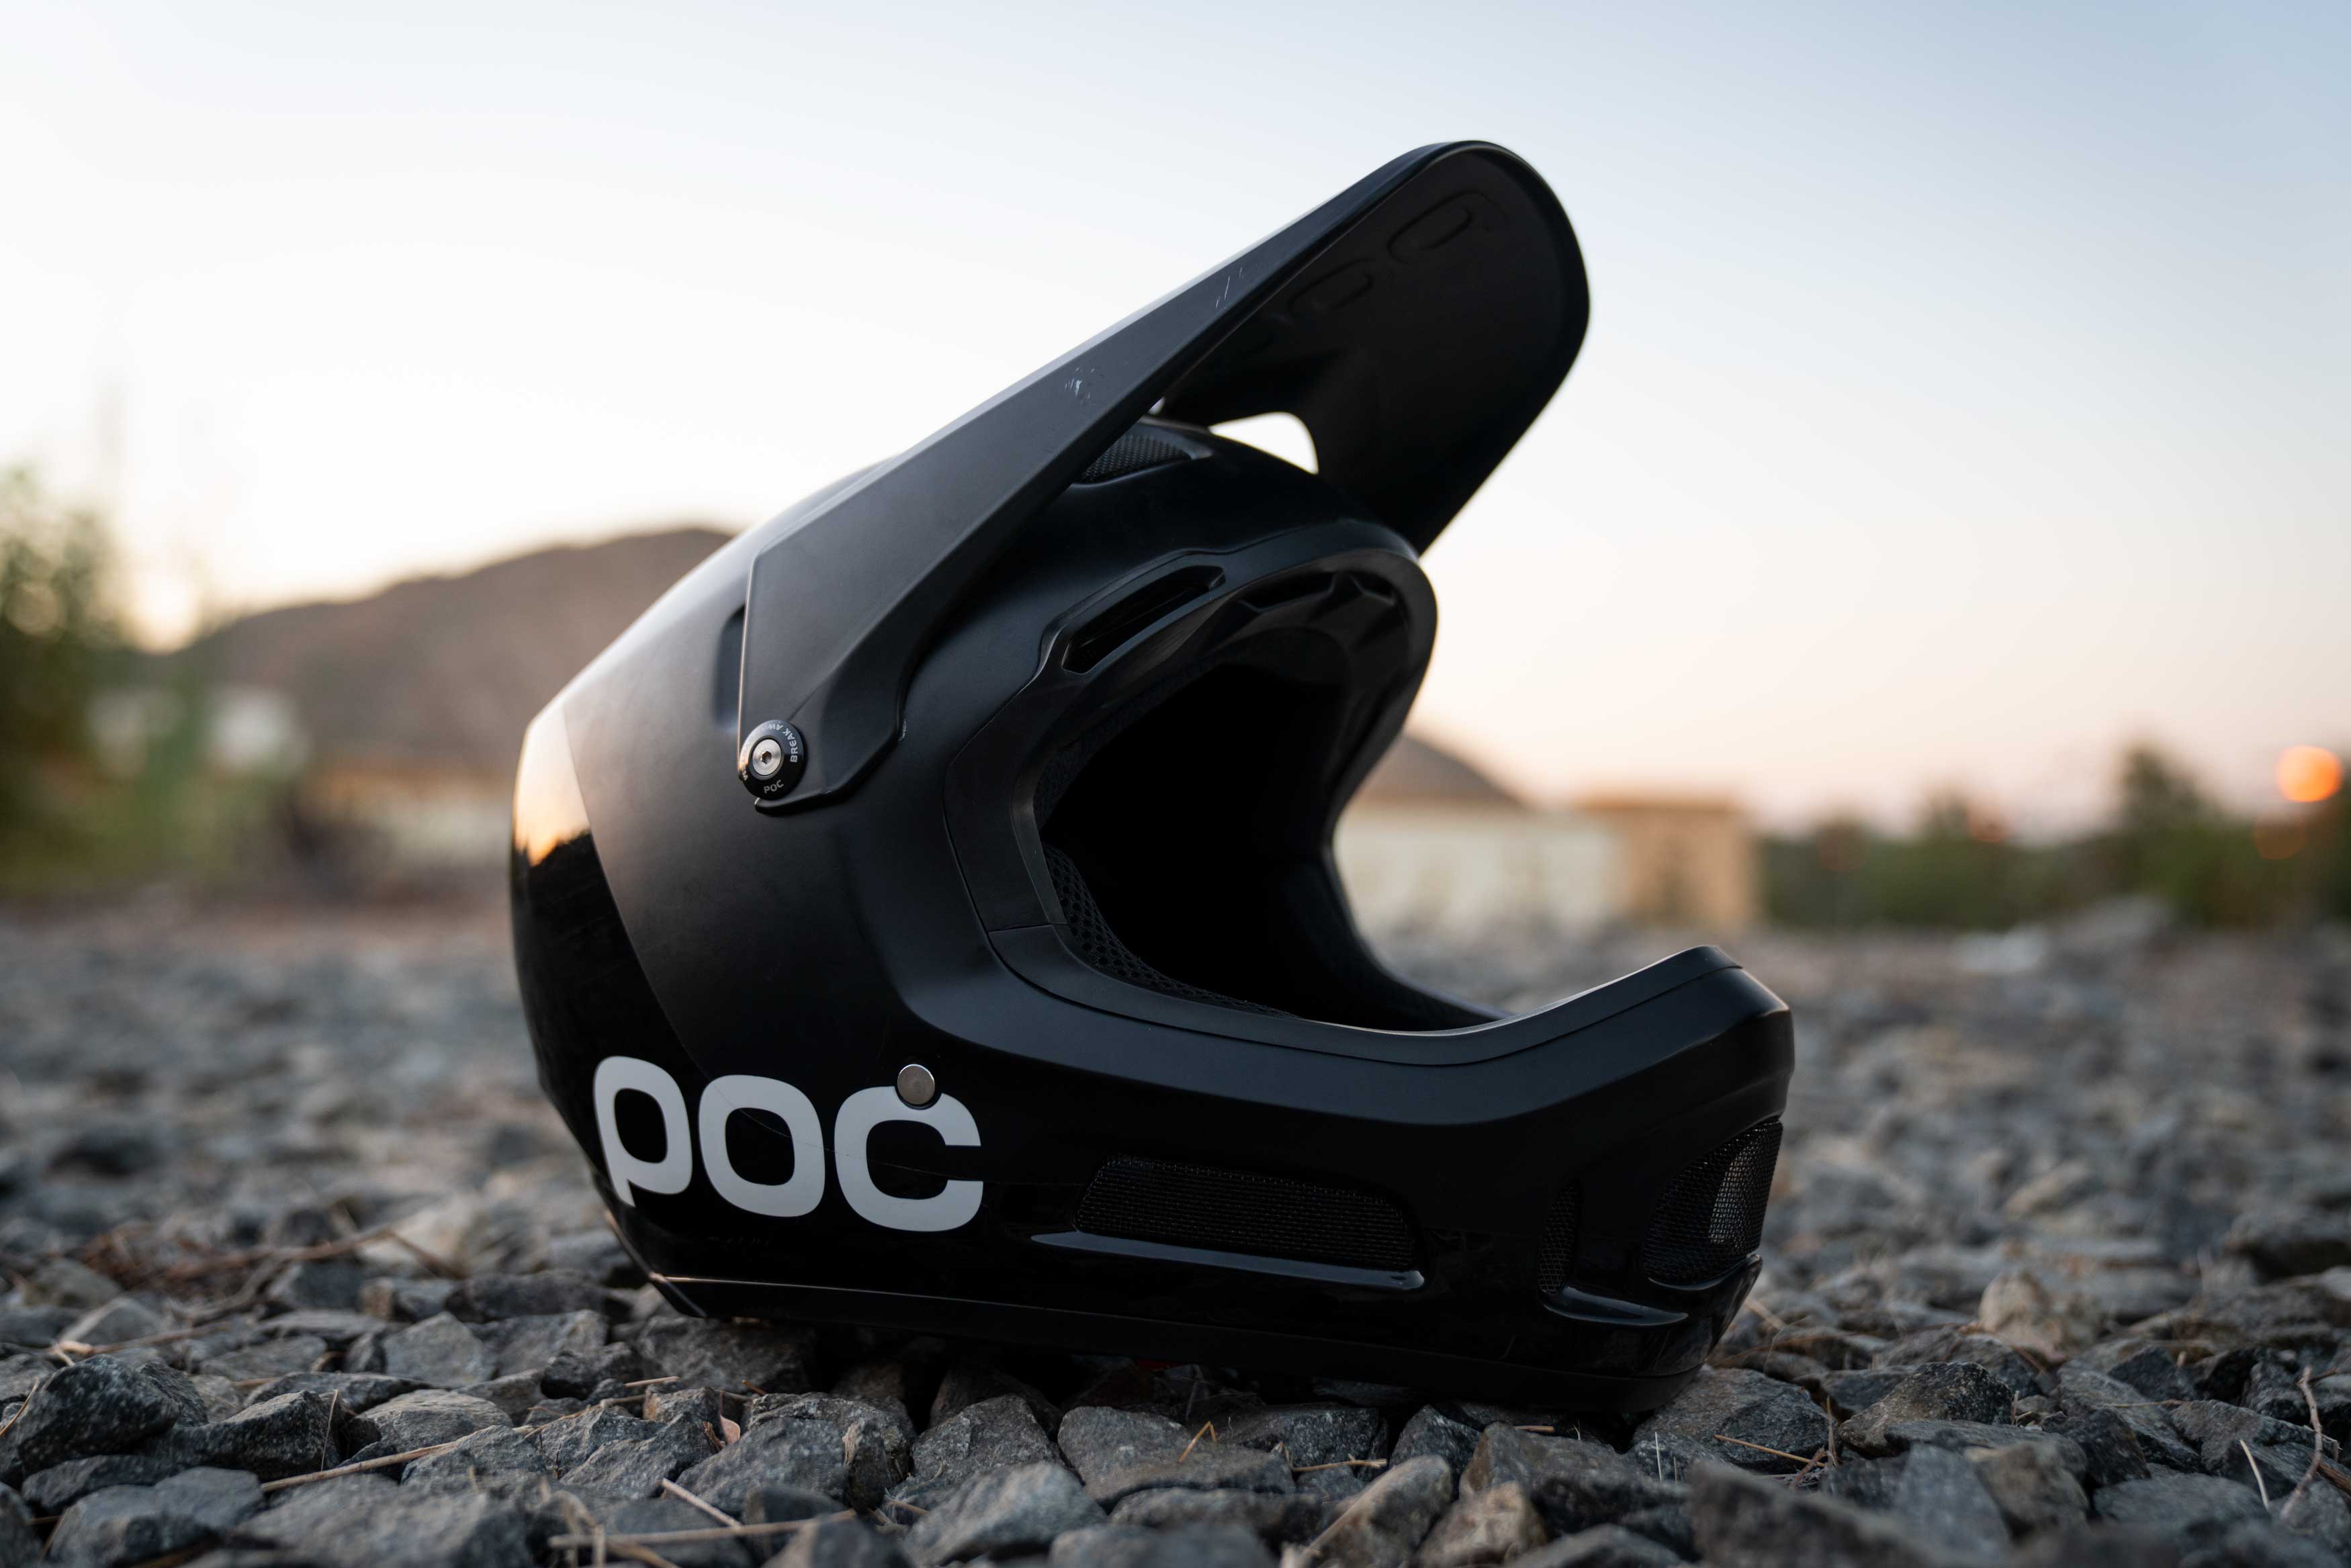 Review: POC Coron Air Spin Helmet